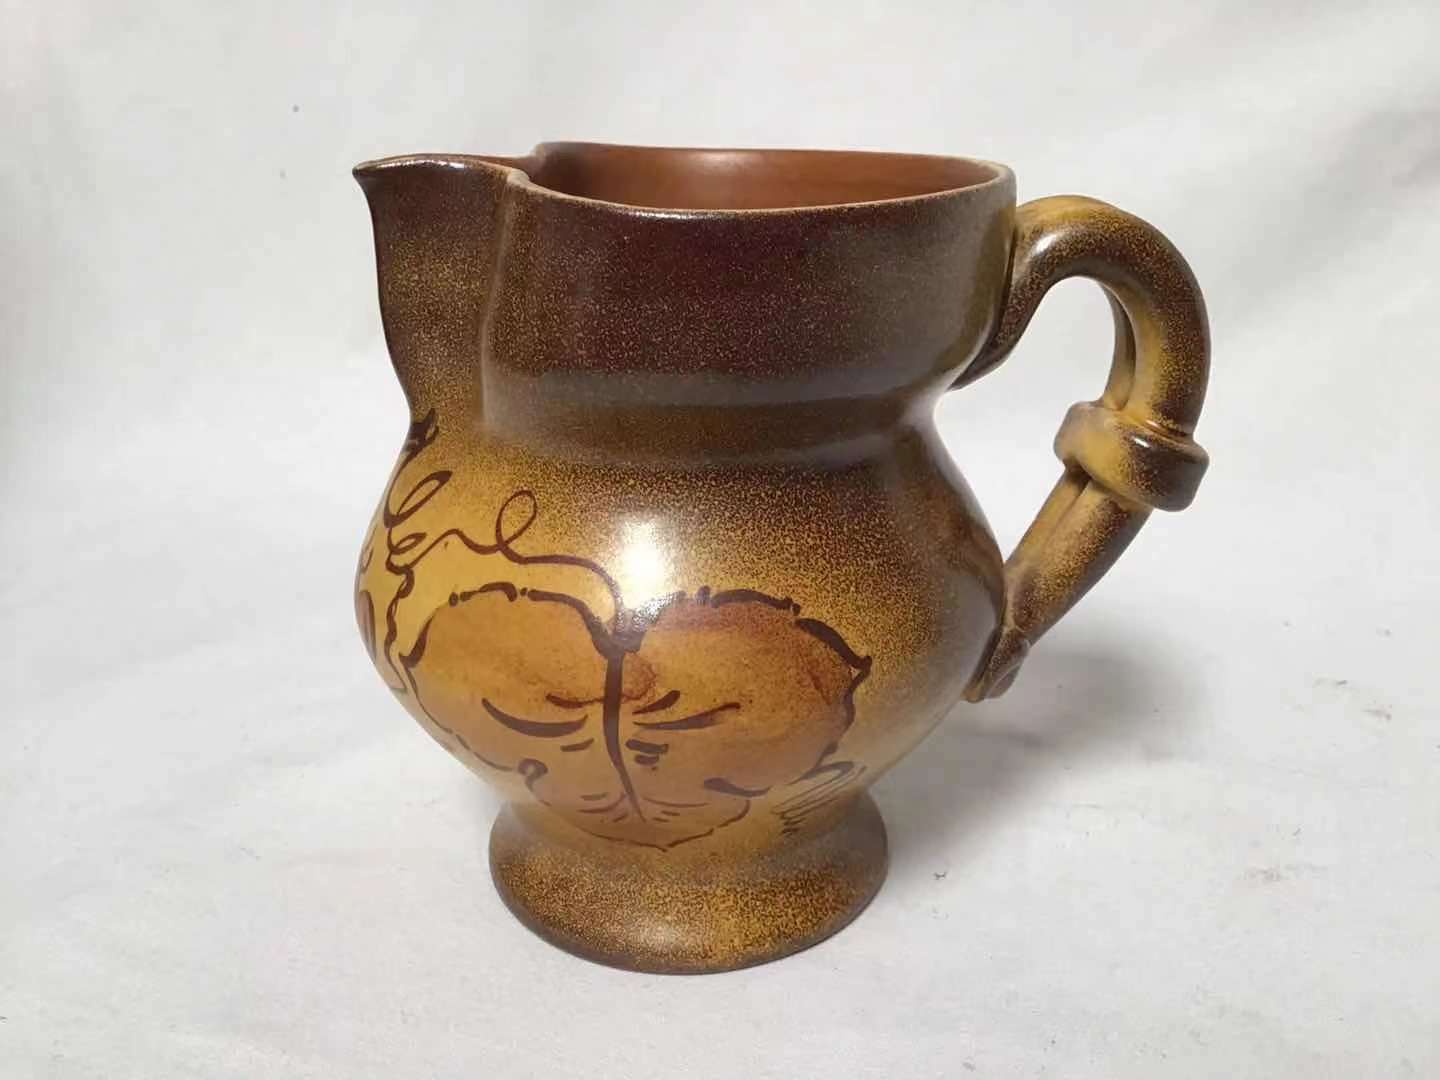 Vintage Antique Milk Coffee Pottery Pot Jug Pitcher Circa 1900 Swiss Ceramic 1pc